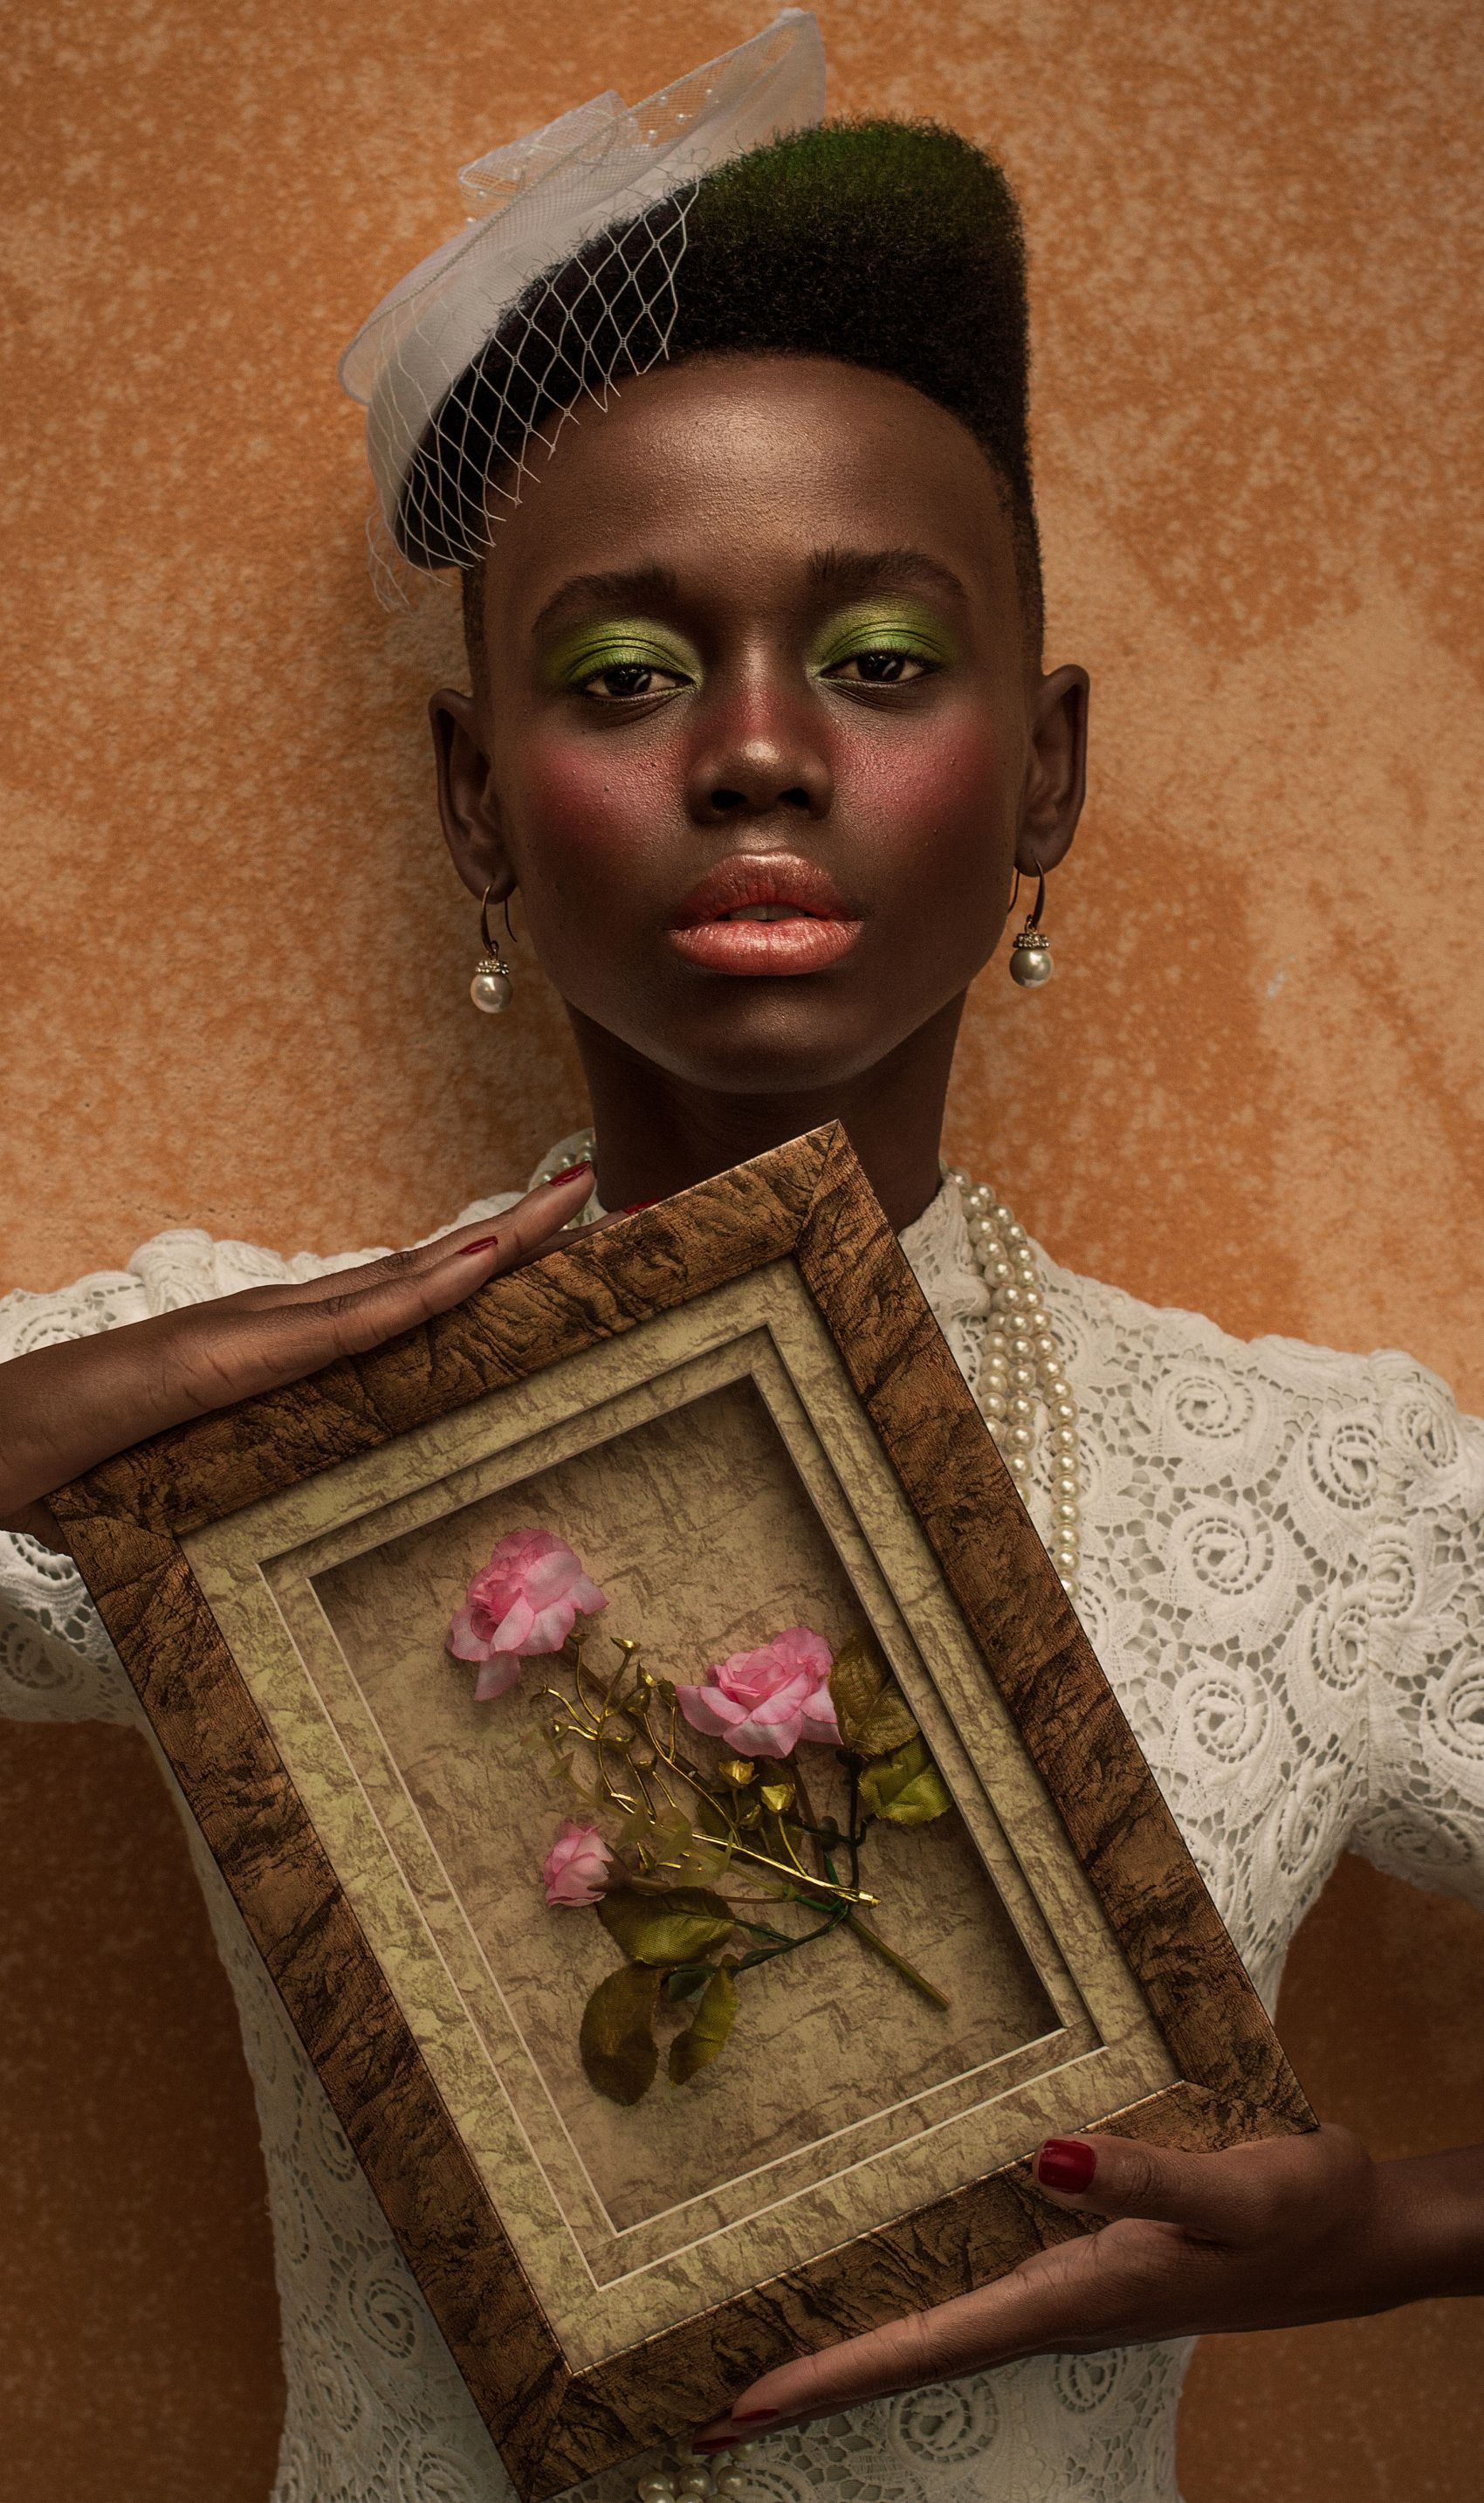 [500+] Black Woman Wallpapers | Wallpapers.com